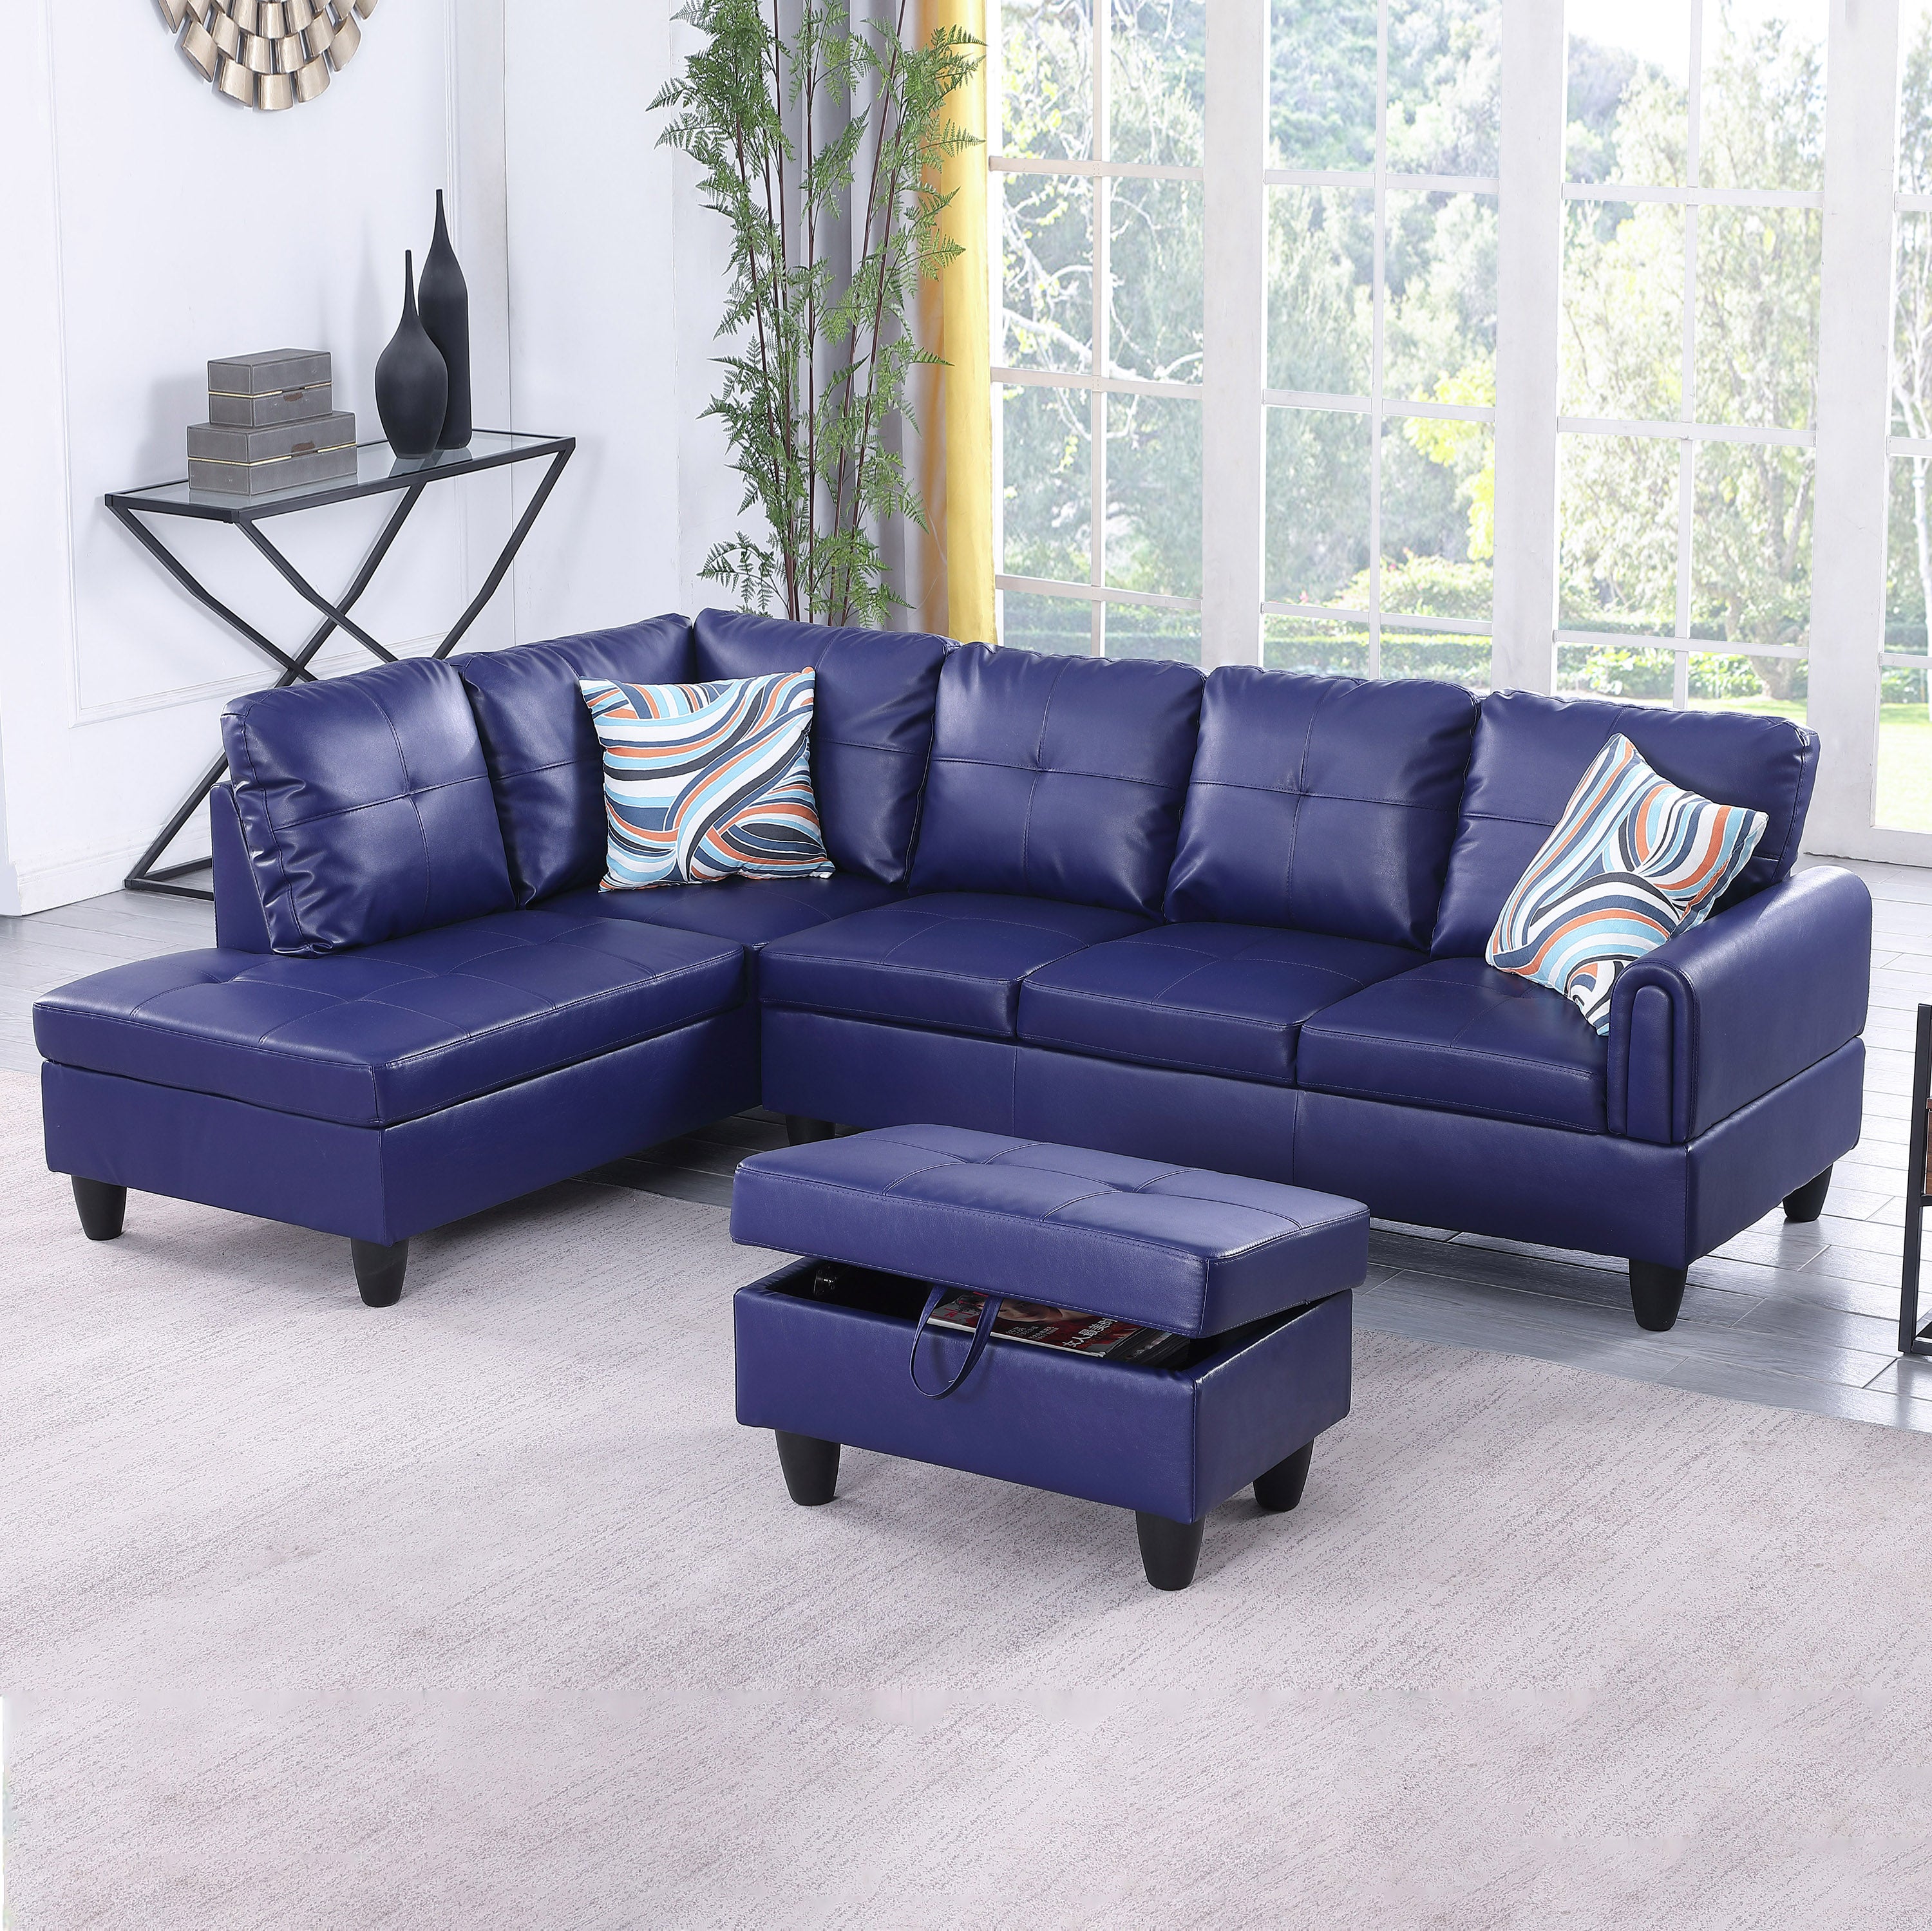 Ainehome Blue Faux Leather Living Room Sofa Set